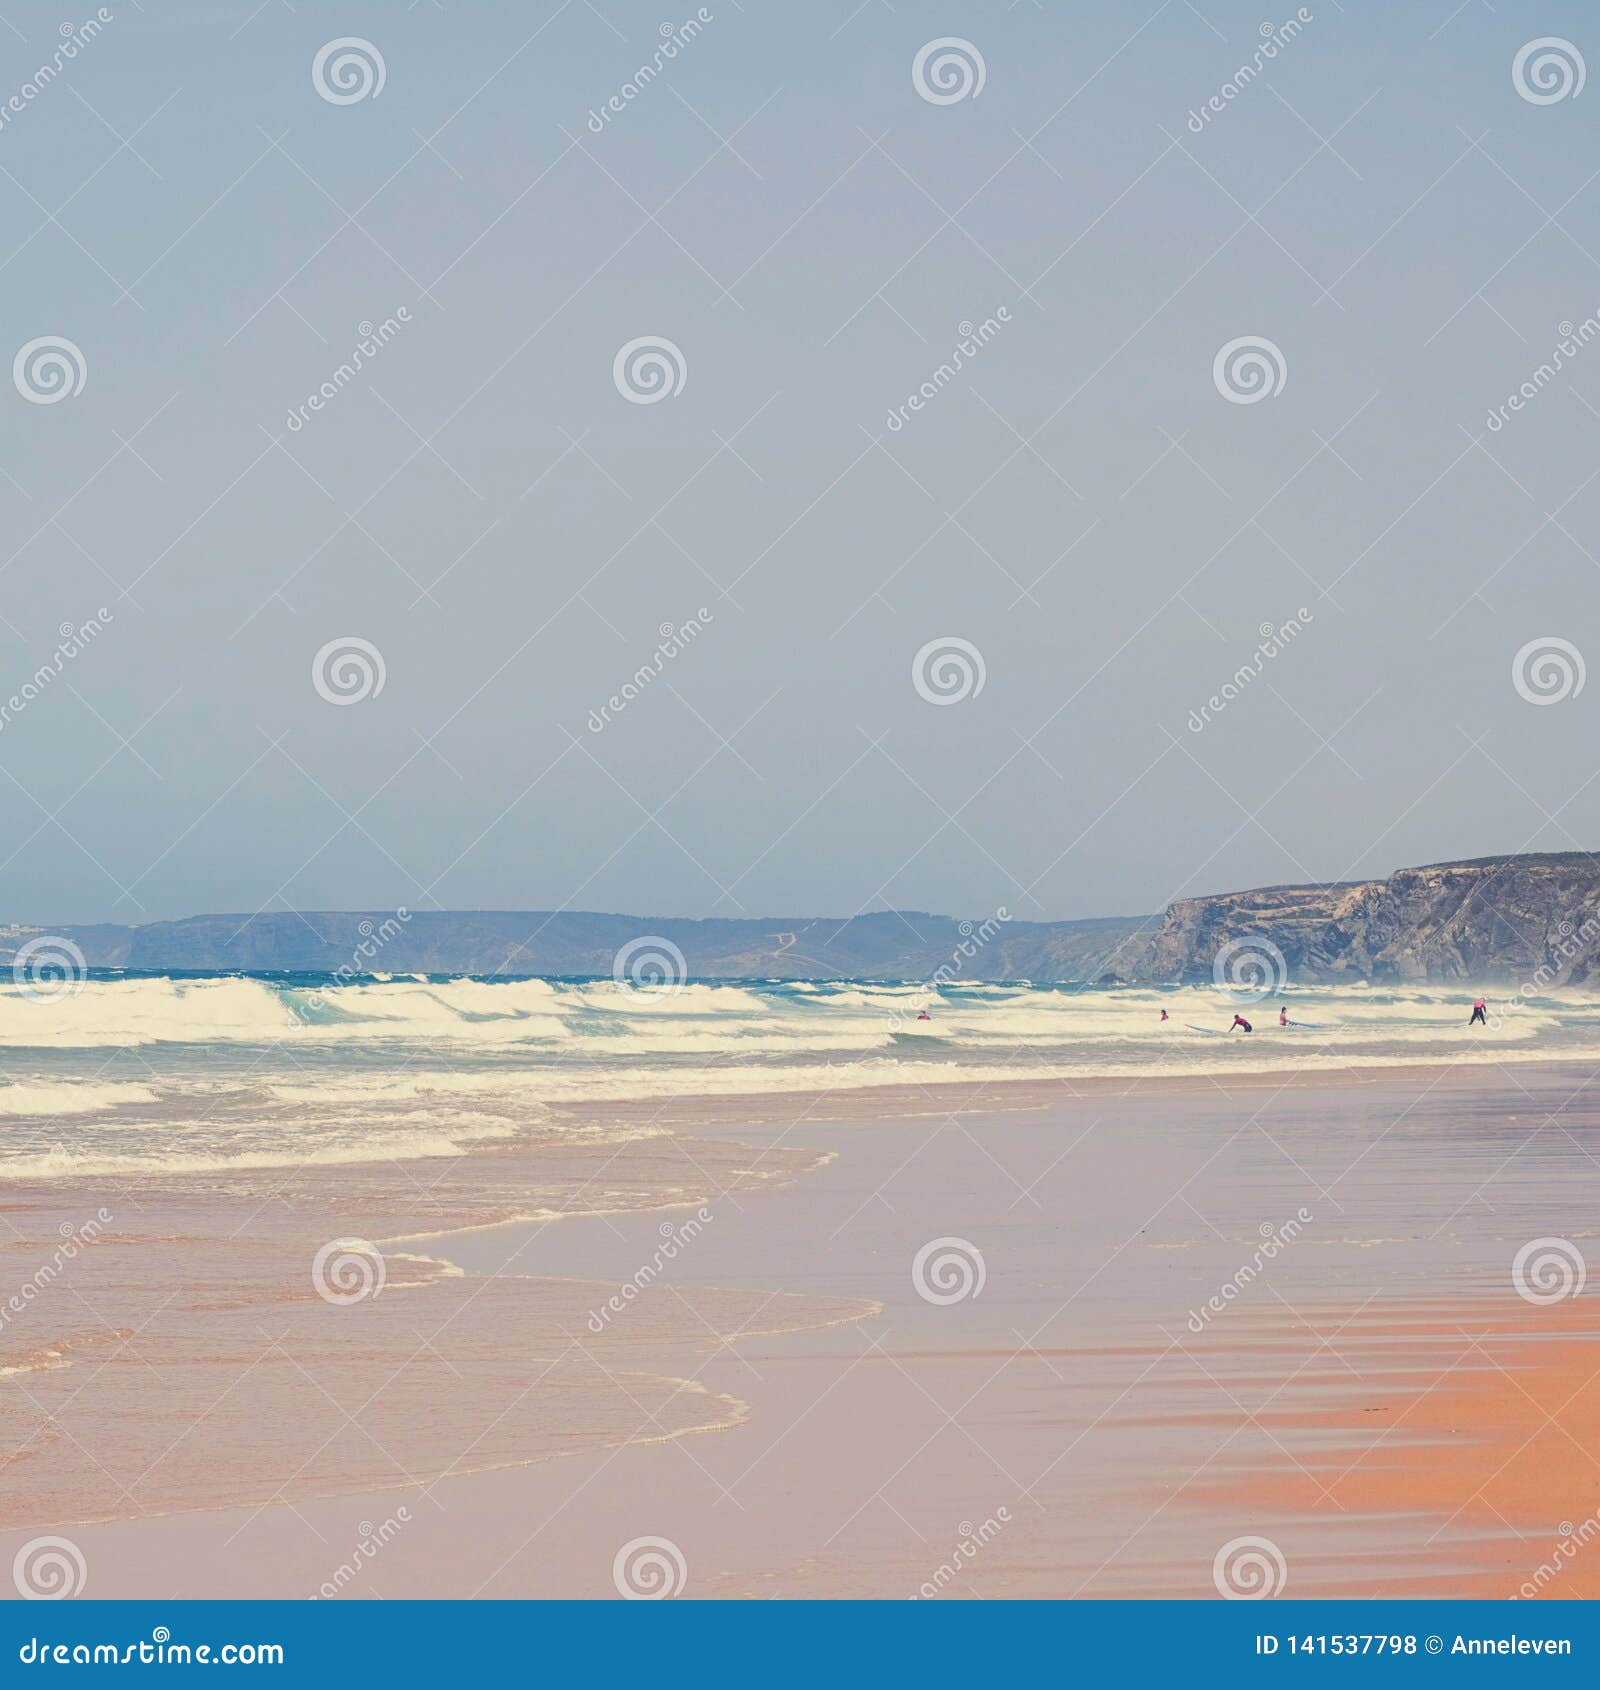 Atlantic Ocean Coast in Europe Stock Photo - Image of luxury, scenery: 141537798